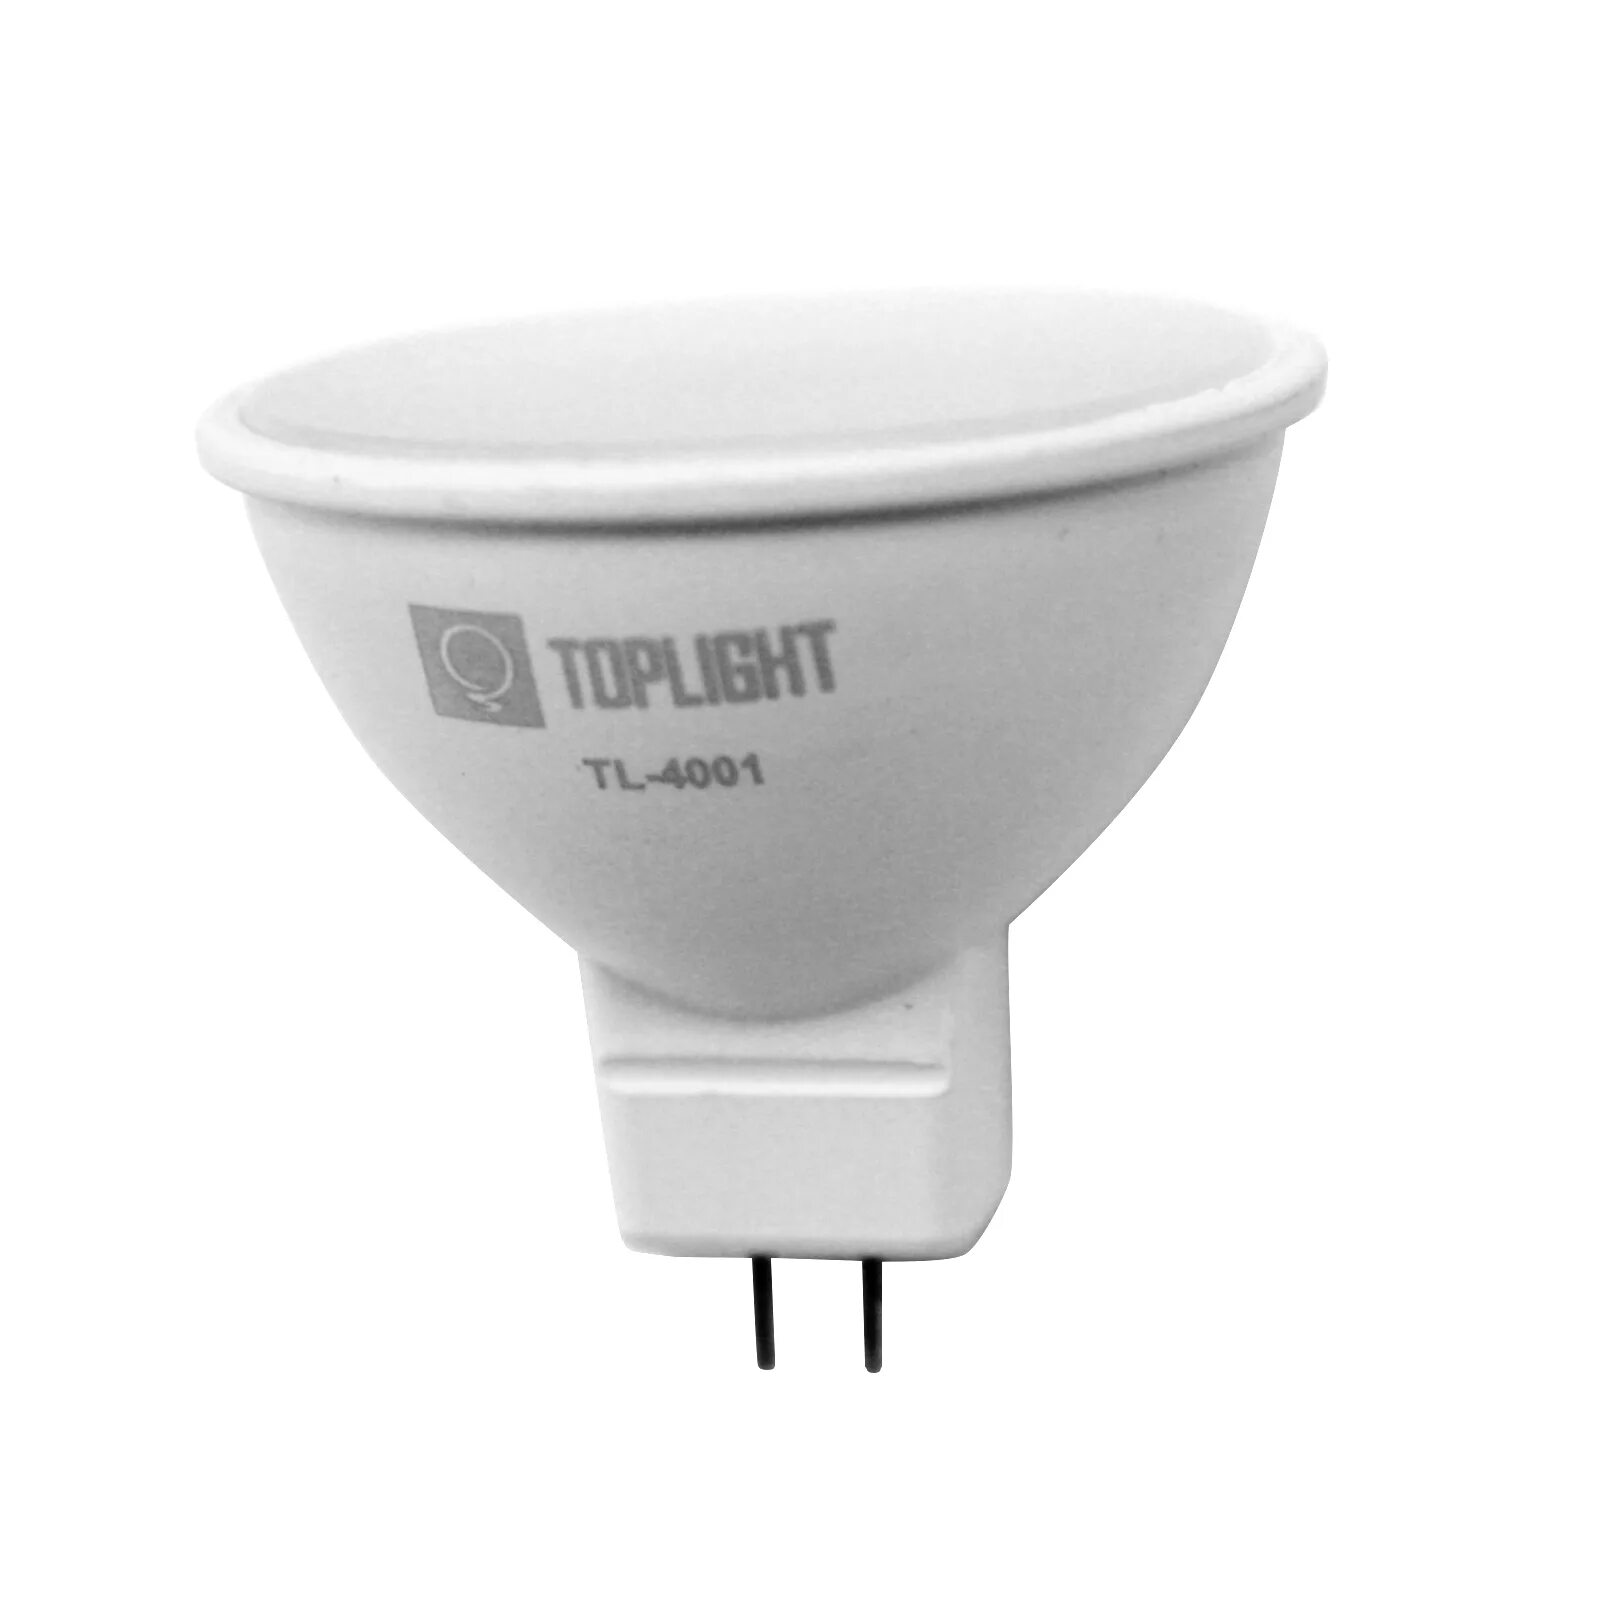 Лампочка gu 5.3 5w 450lm. Цоколь для лампочки gu5.3. Лампа gu5.3 12v светодиодная. Лампа светодиодная Top Light TL-3002, gu5.3, 6вт. Купить лампочку gu 5.3